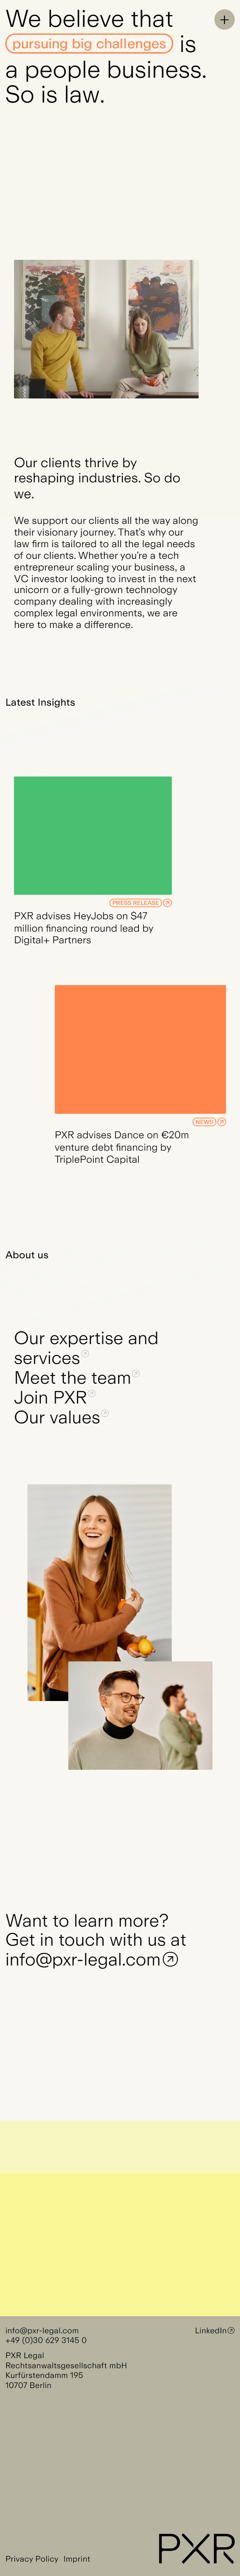 PXR Legal Business & Corporate Clean